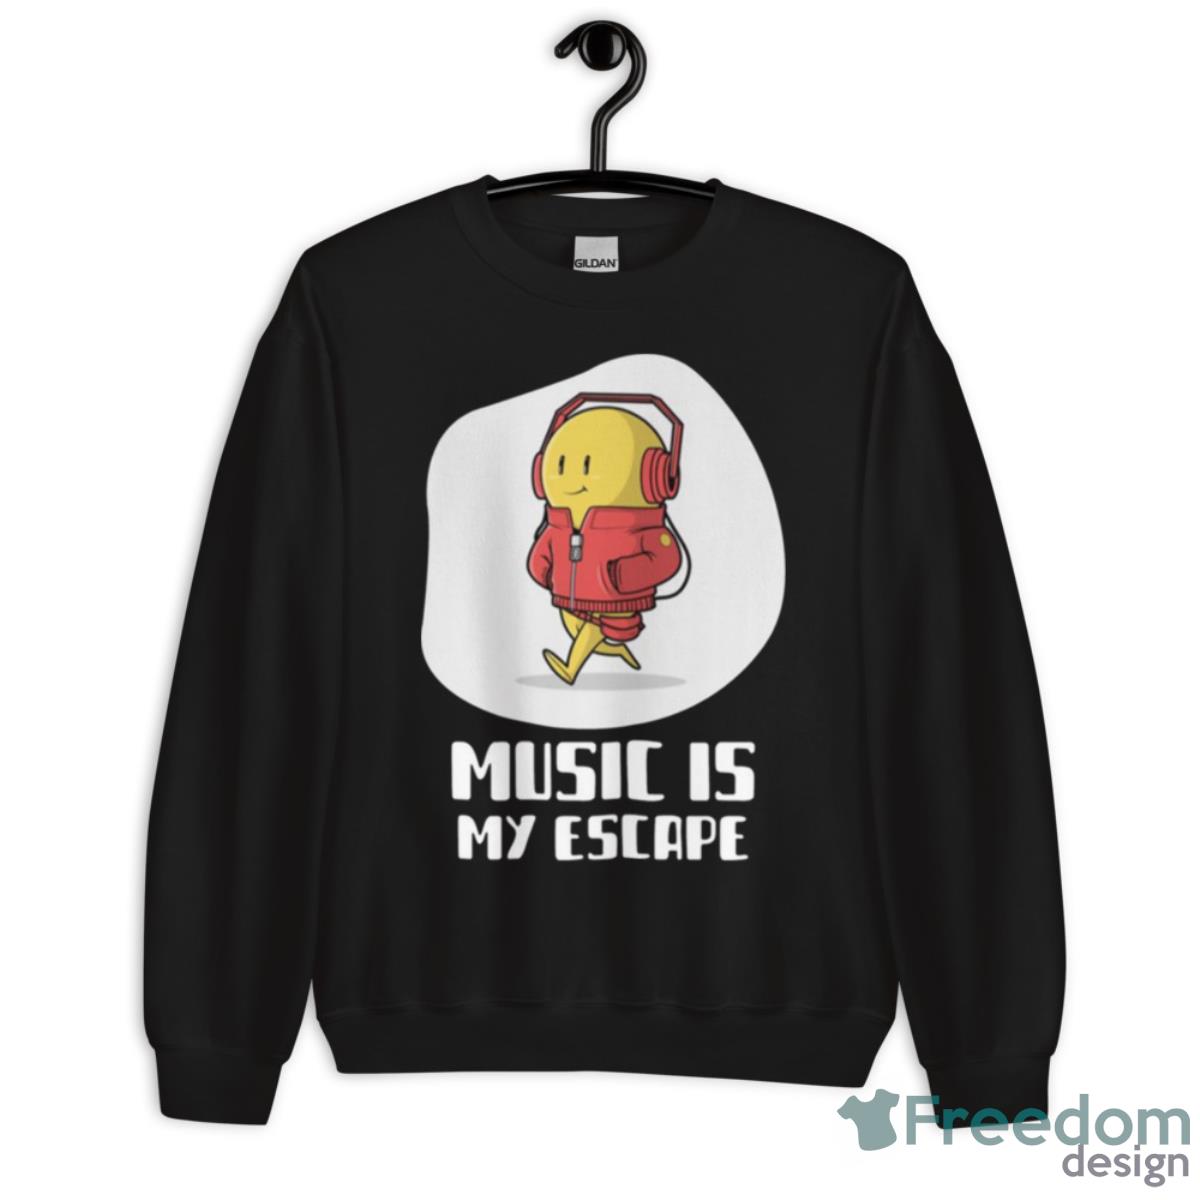 Music Is Love Shirt